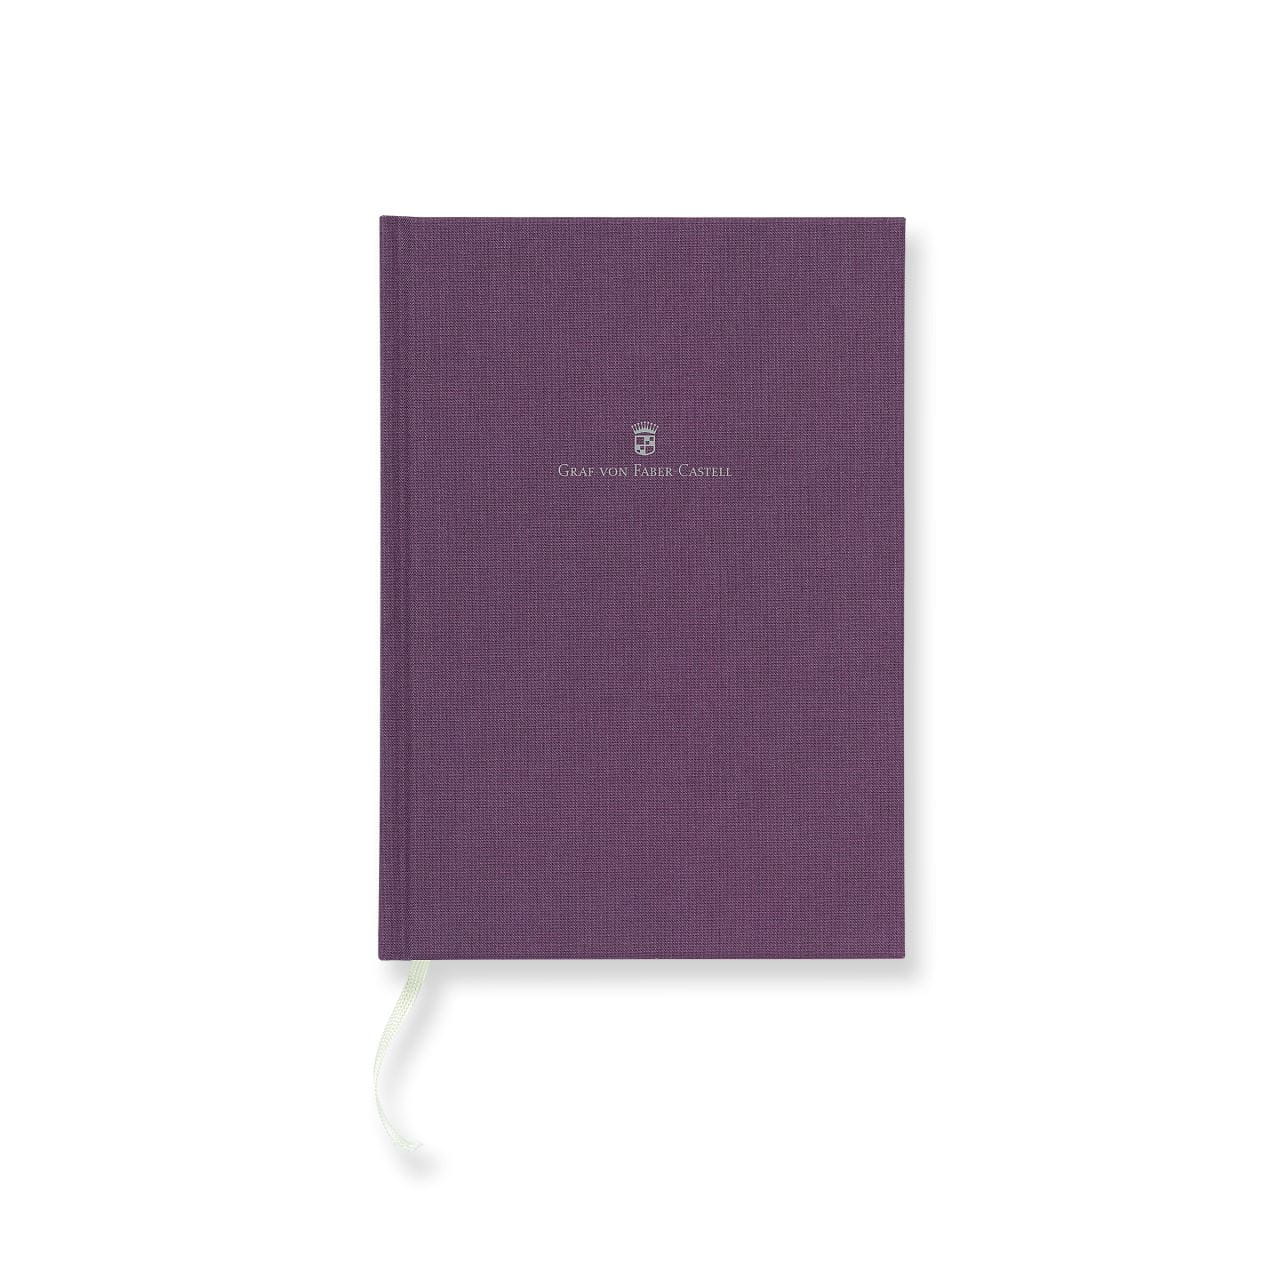 Graf-von-Faber-Castell - Recharge cahier relie lin A5, Violet